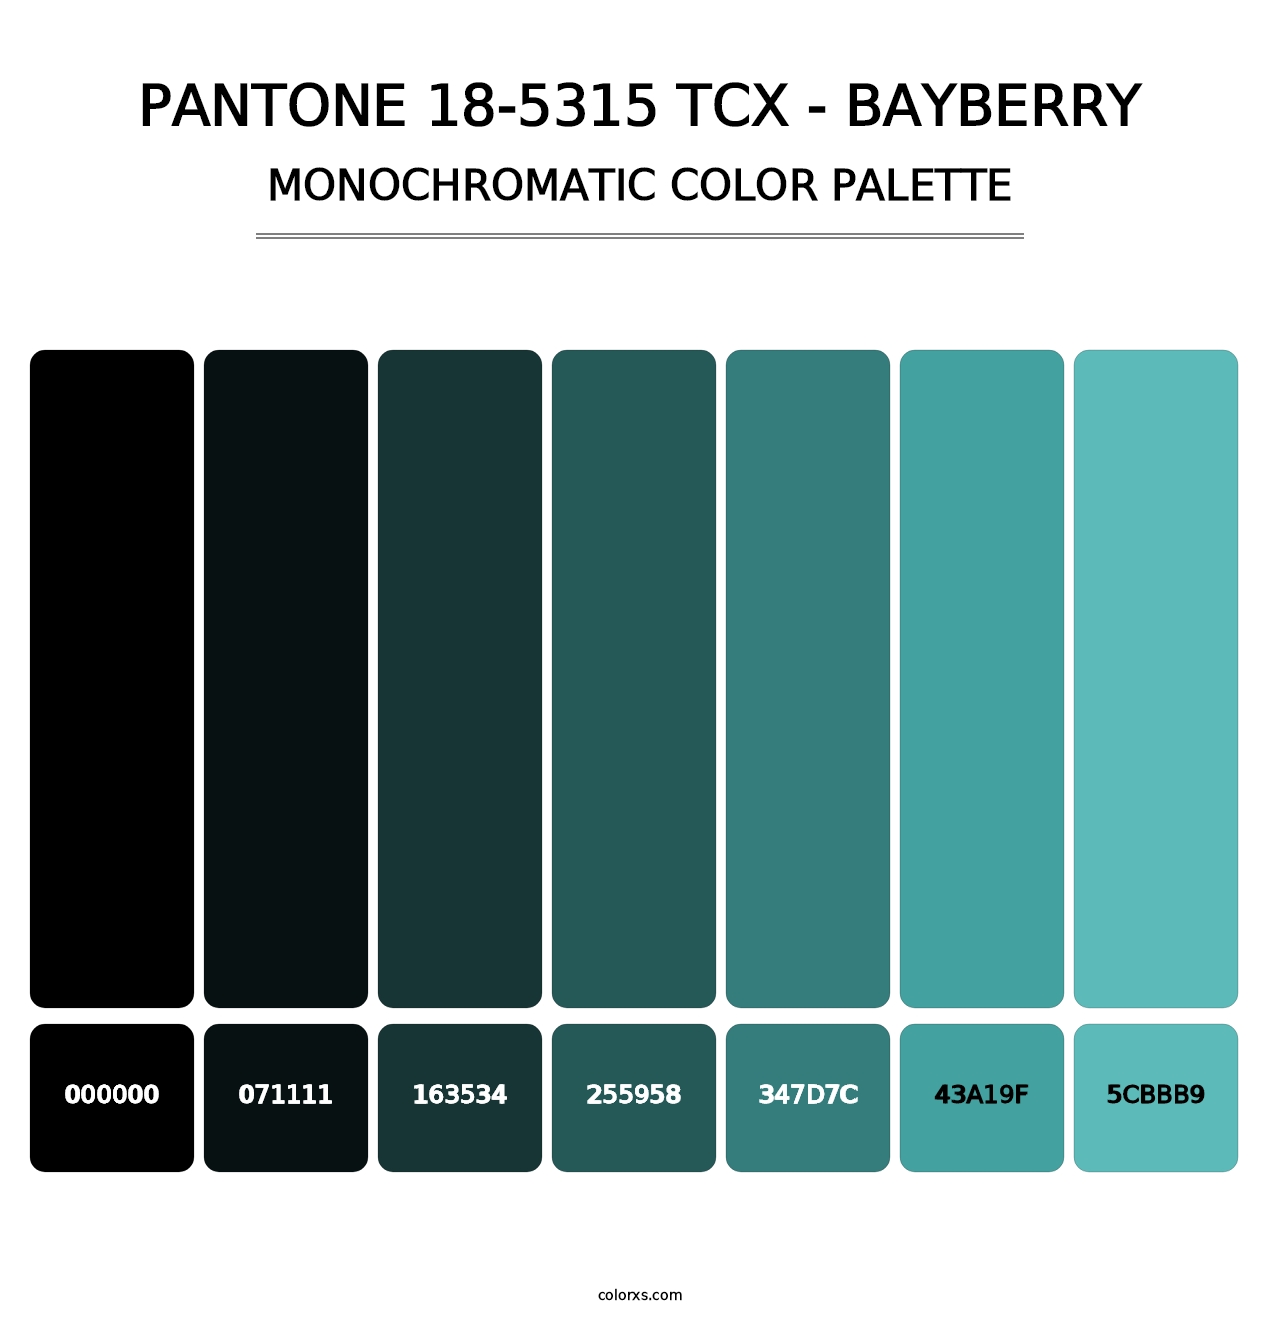 PANTONE 18-5315 TCX - Bayberry - Monochromatic Color Palette